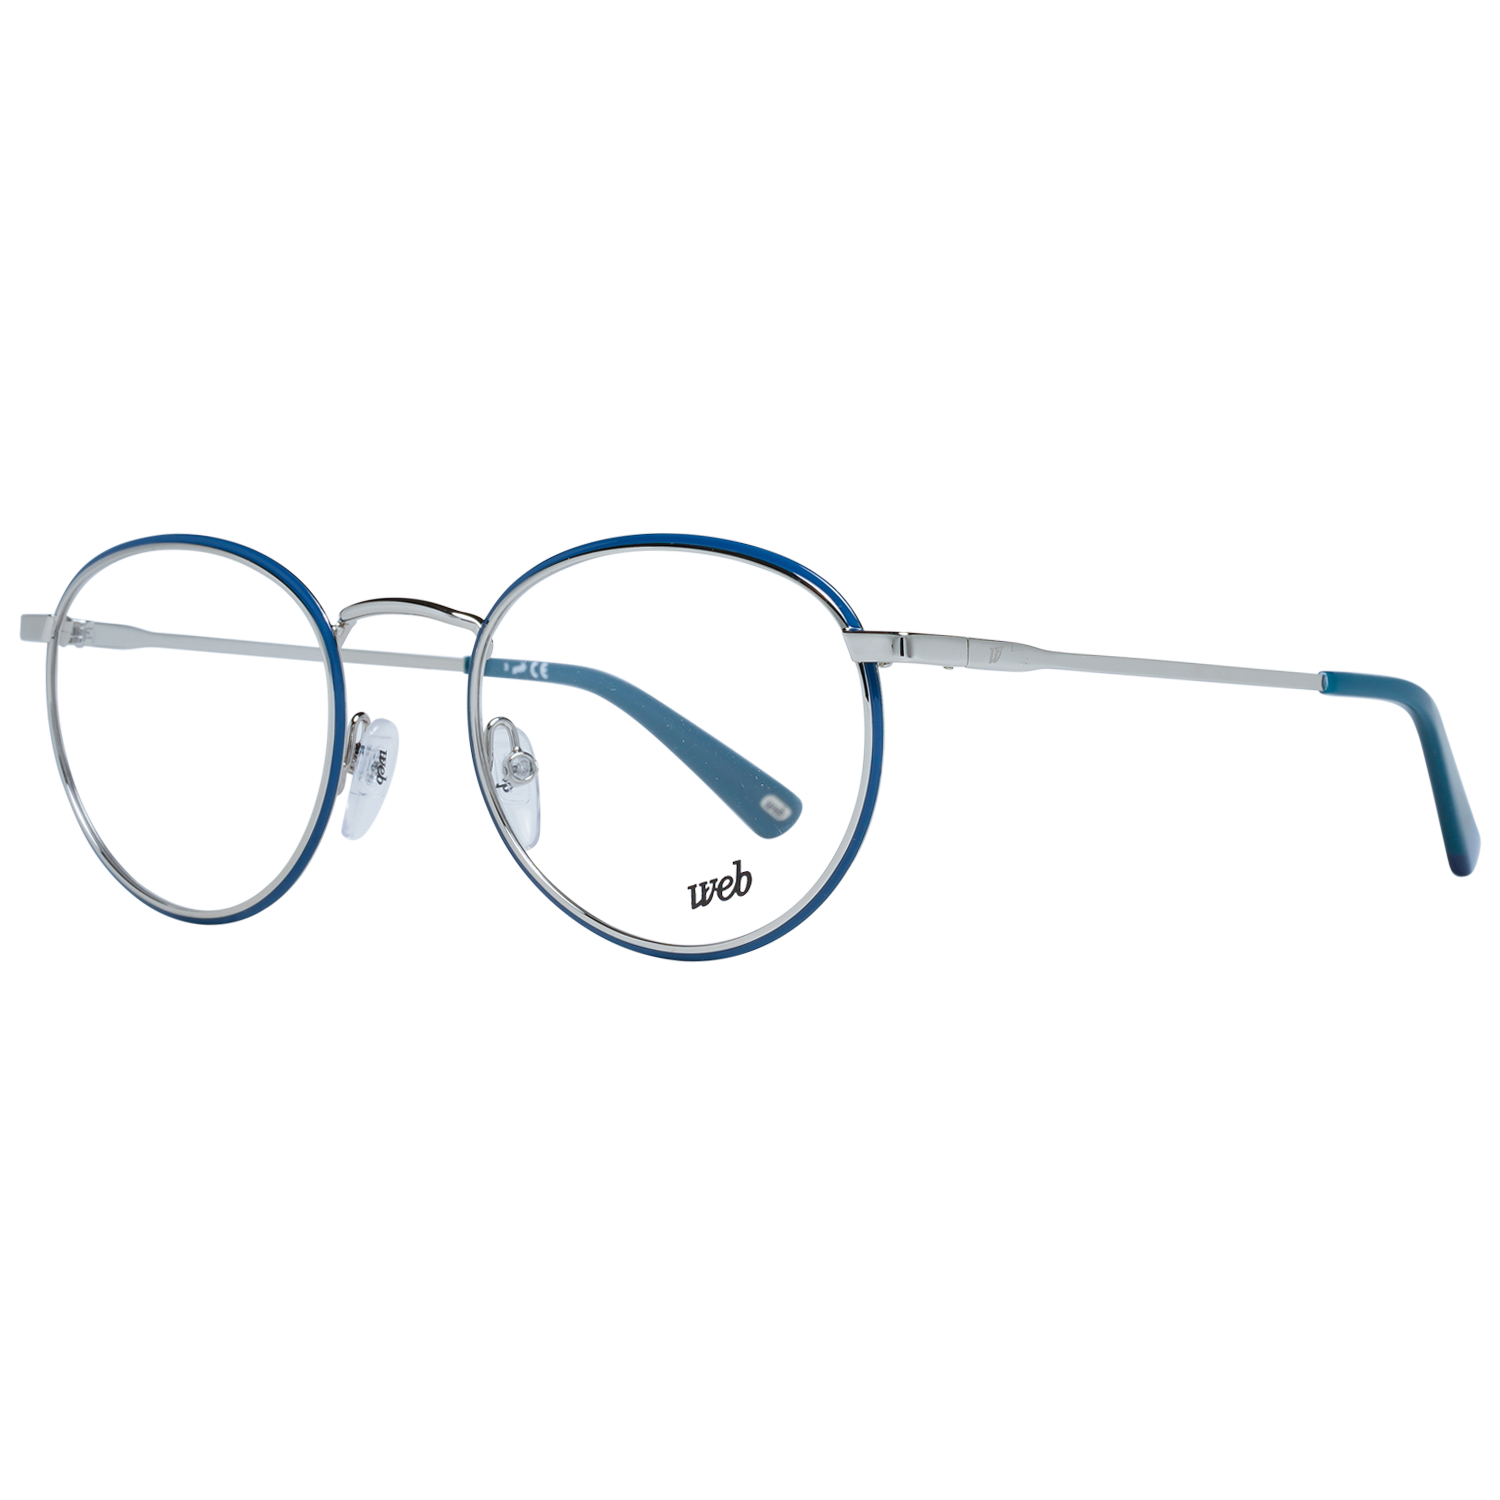 Web Frames Web Prescription Glasses Optical Frame WE5367 016 51 Eyeglasses Eyewear UK USA Australia 